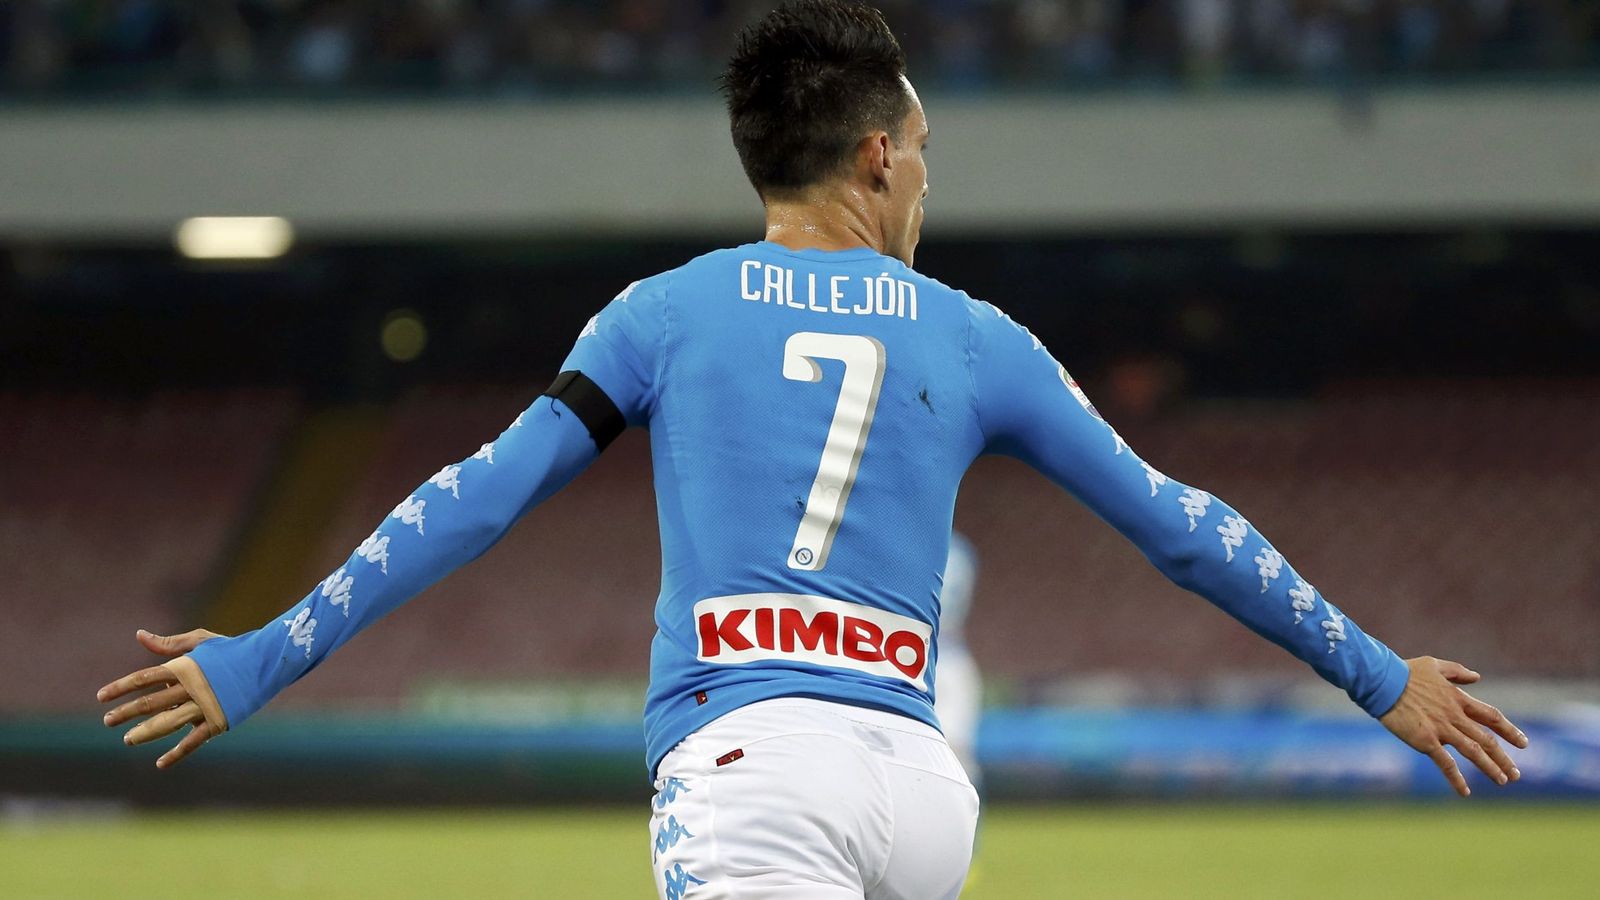 Foto: Callejón ha marcado cinco goles esta temporada (Ciro De Luca/Reuters).